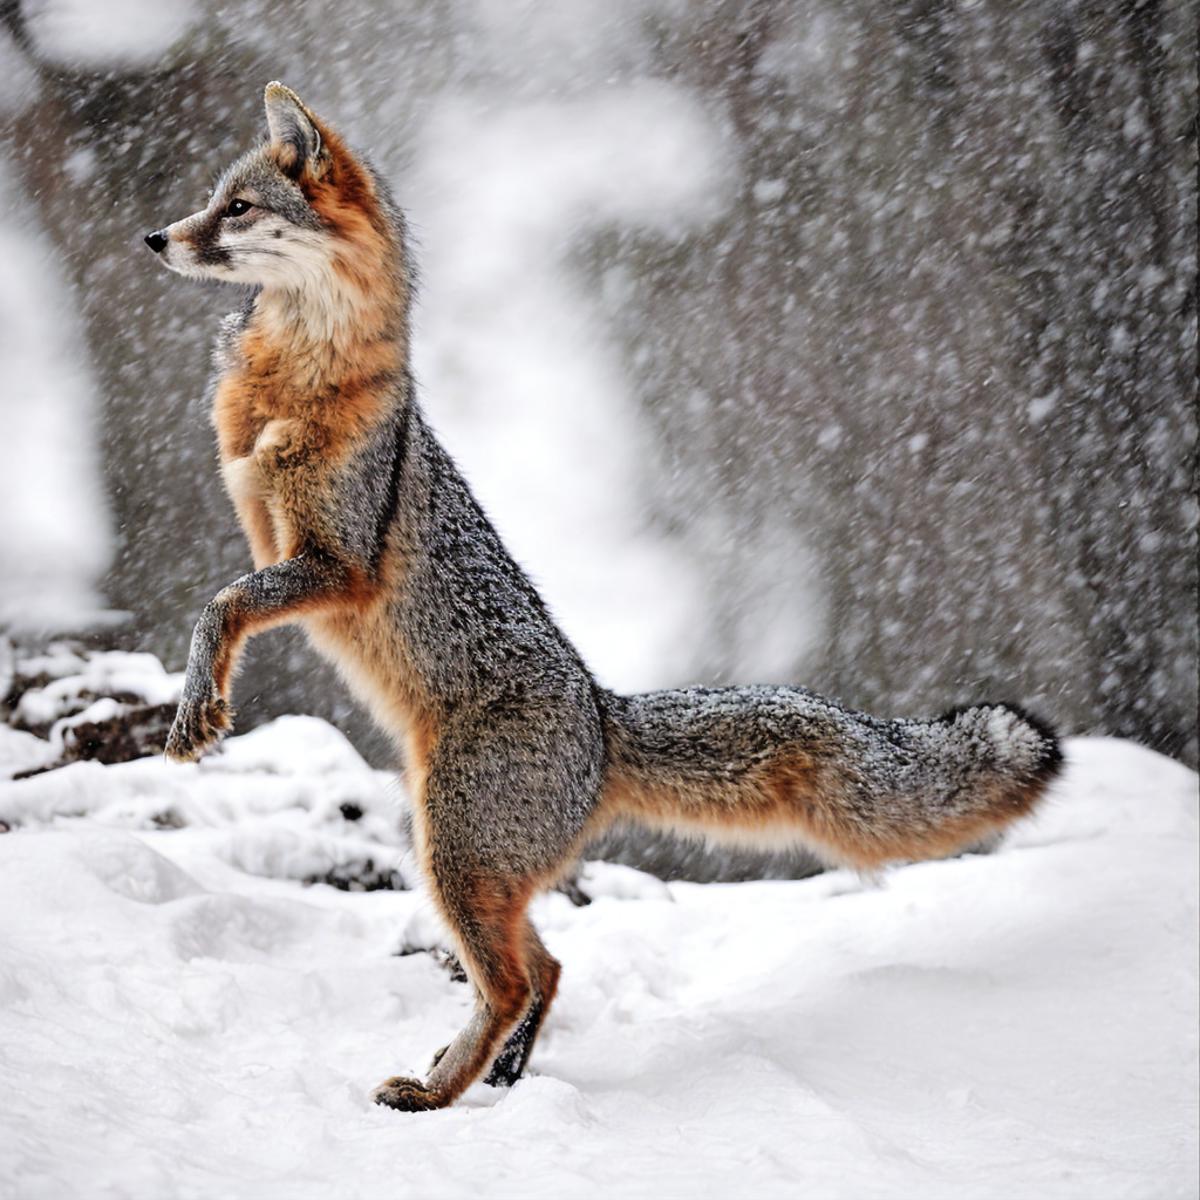 Gray fox (Urocyon cinereoargenteus) image by sempai_squad